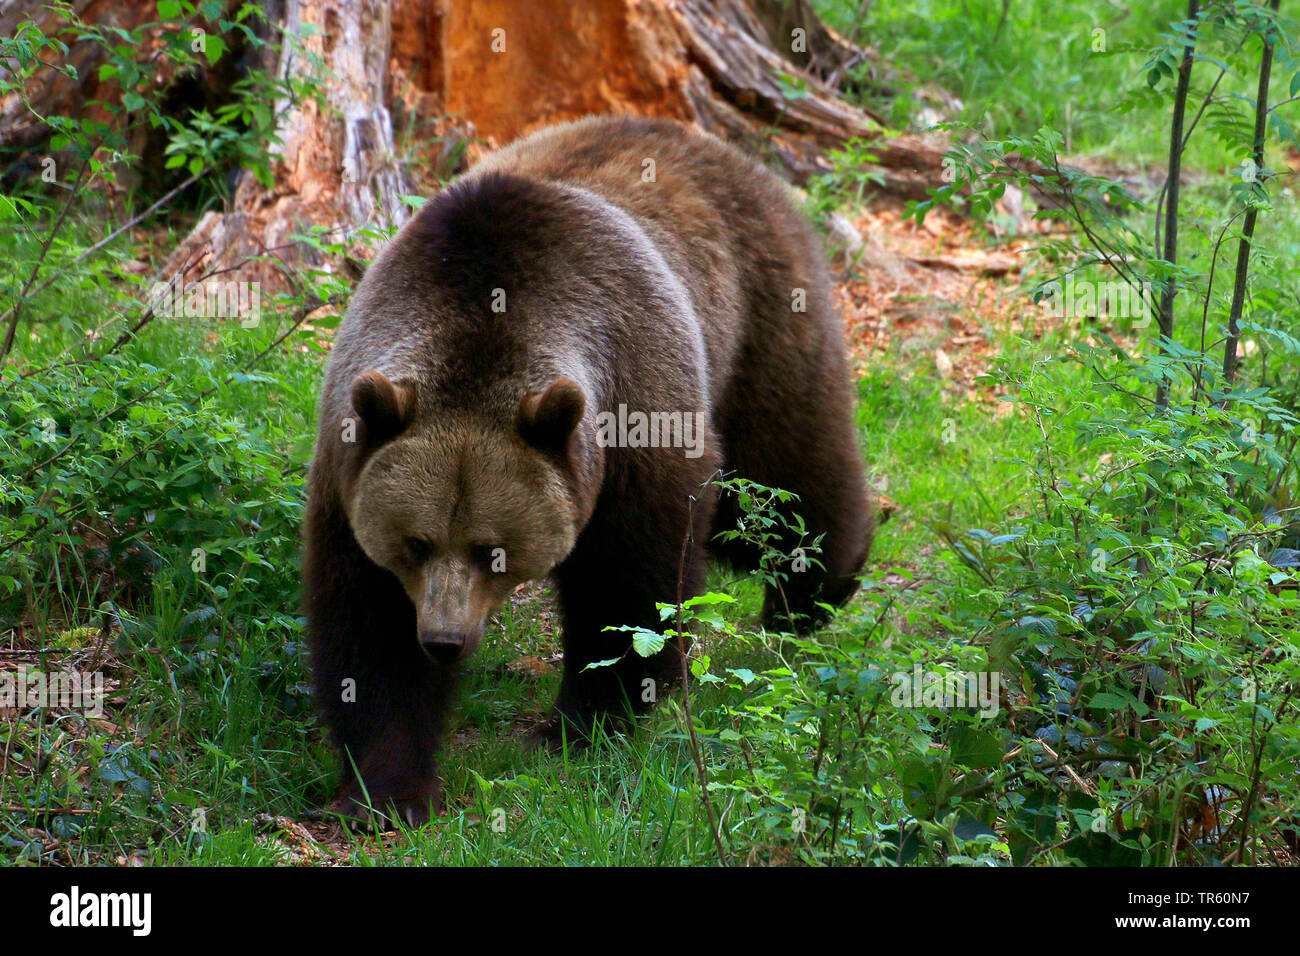 European brown bear (Ursus arctos arctos), walking past a root, Germany Stock Photo